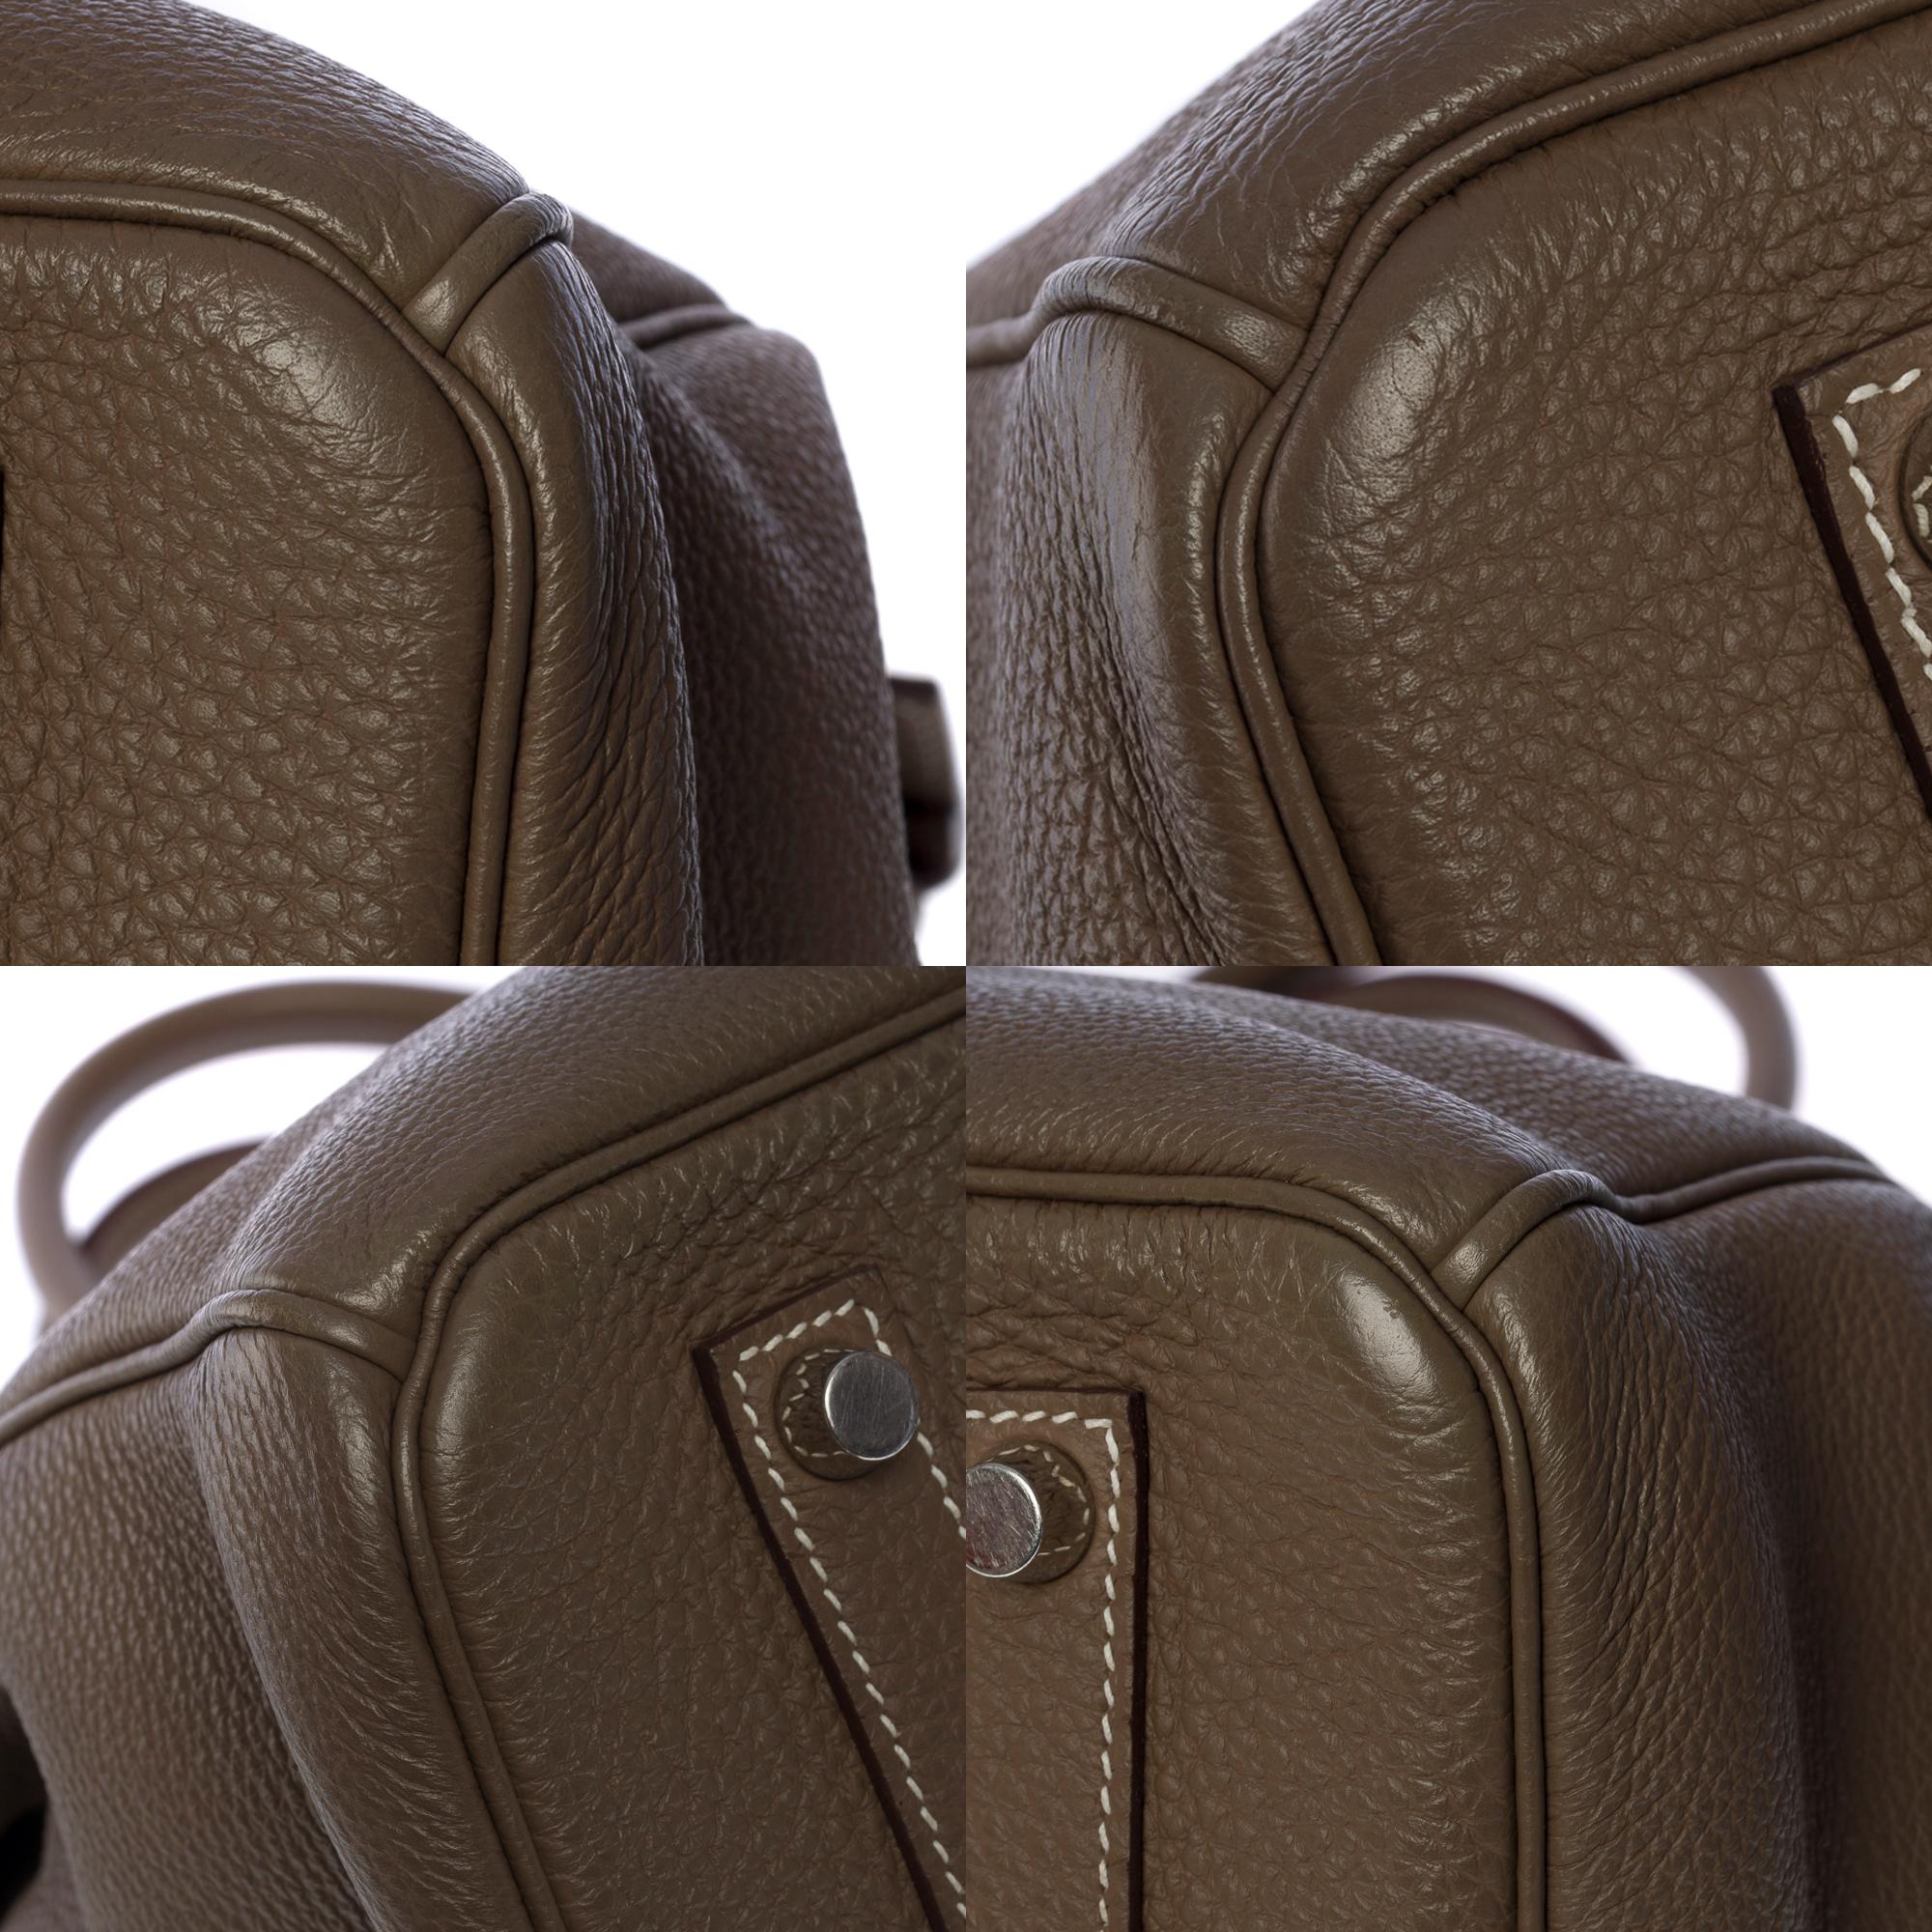 Stunning Hermès Birkin 35 handbag in etoupe Togo leather, SHW 6